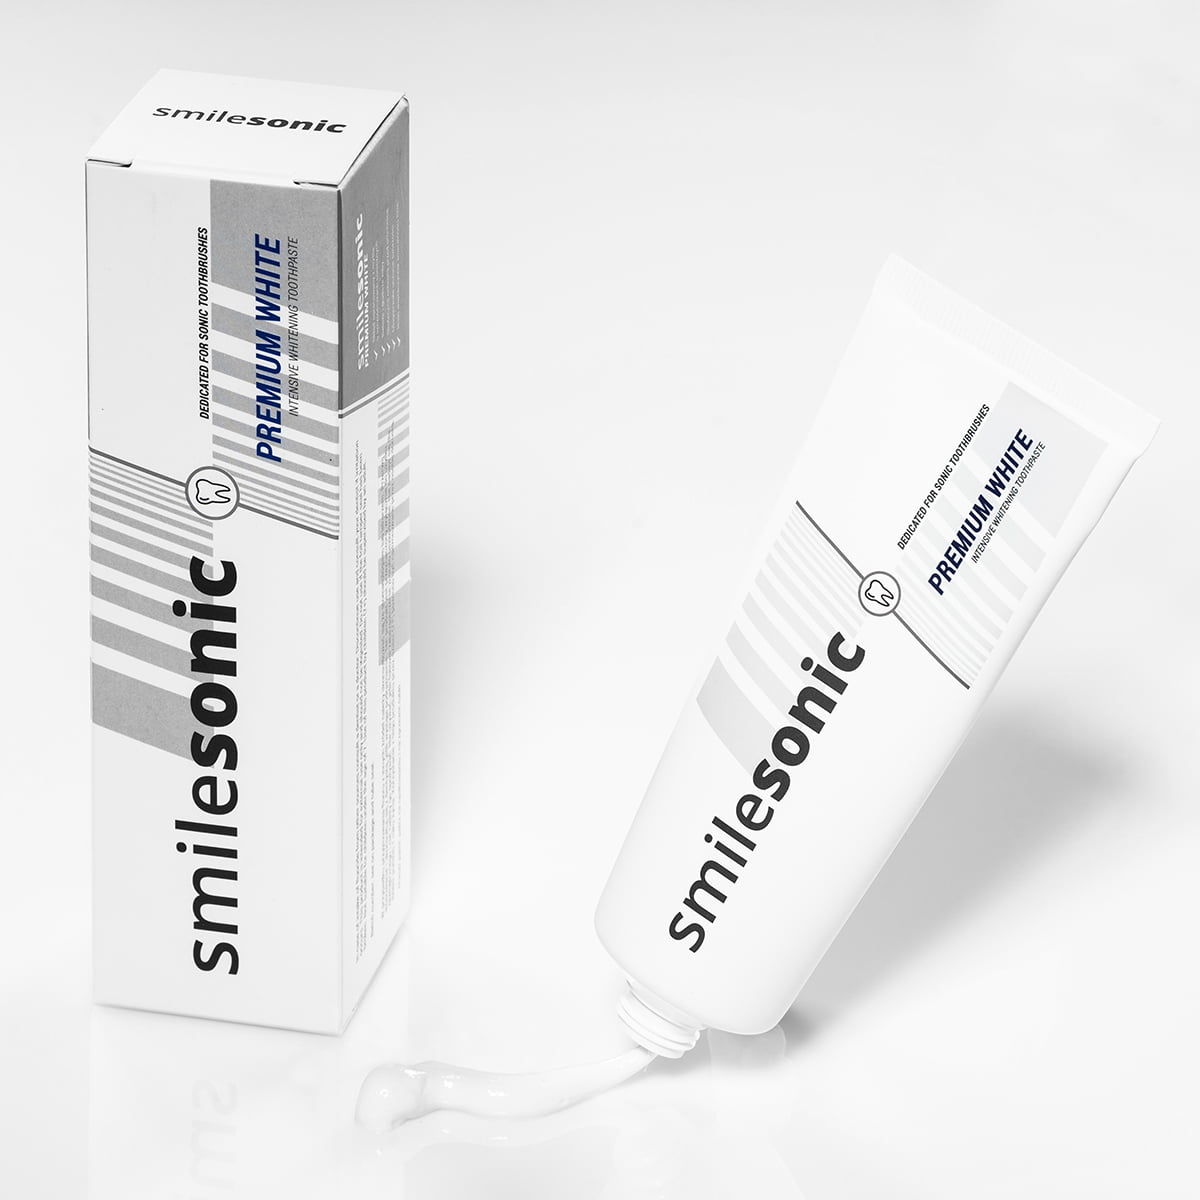 Smilesonic Premium White toothpaste